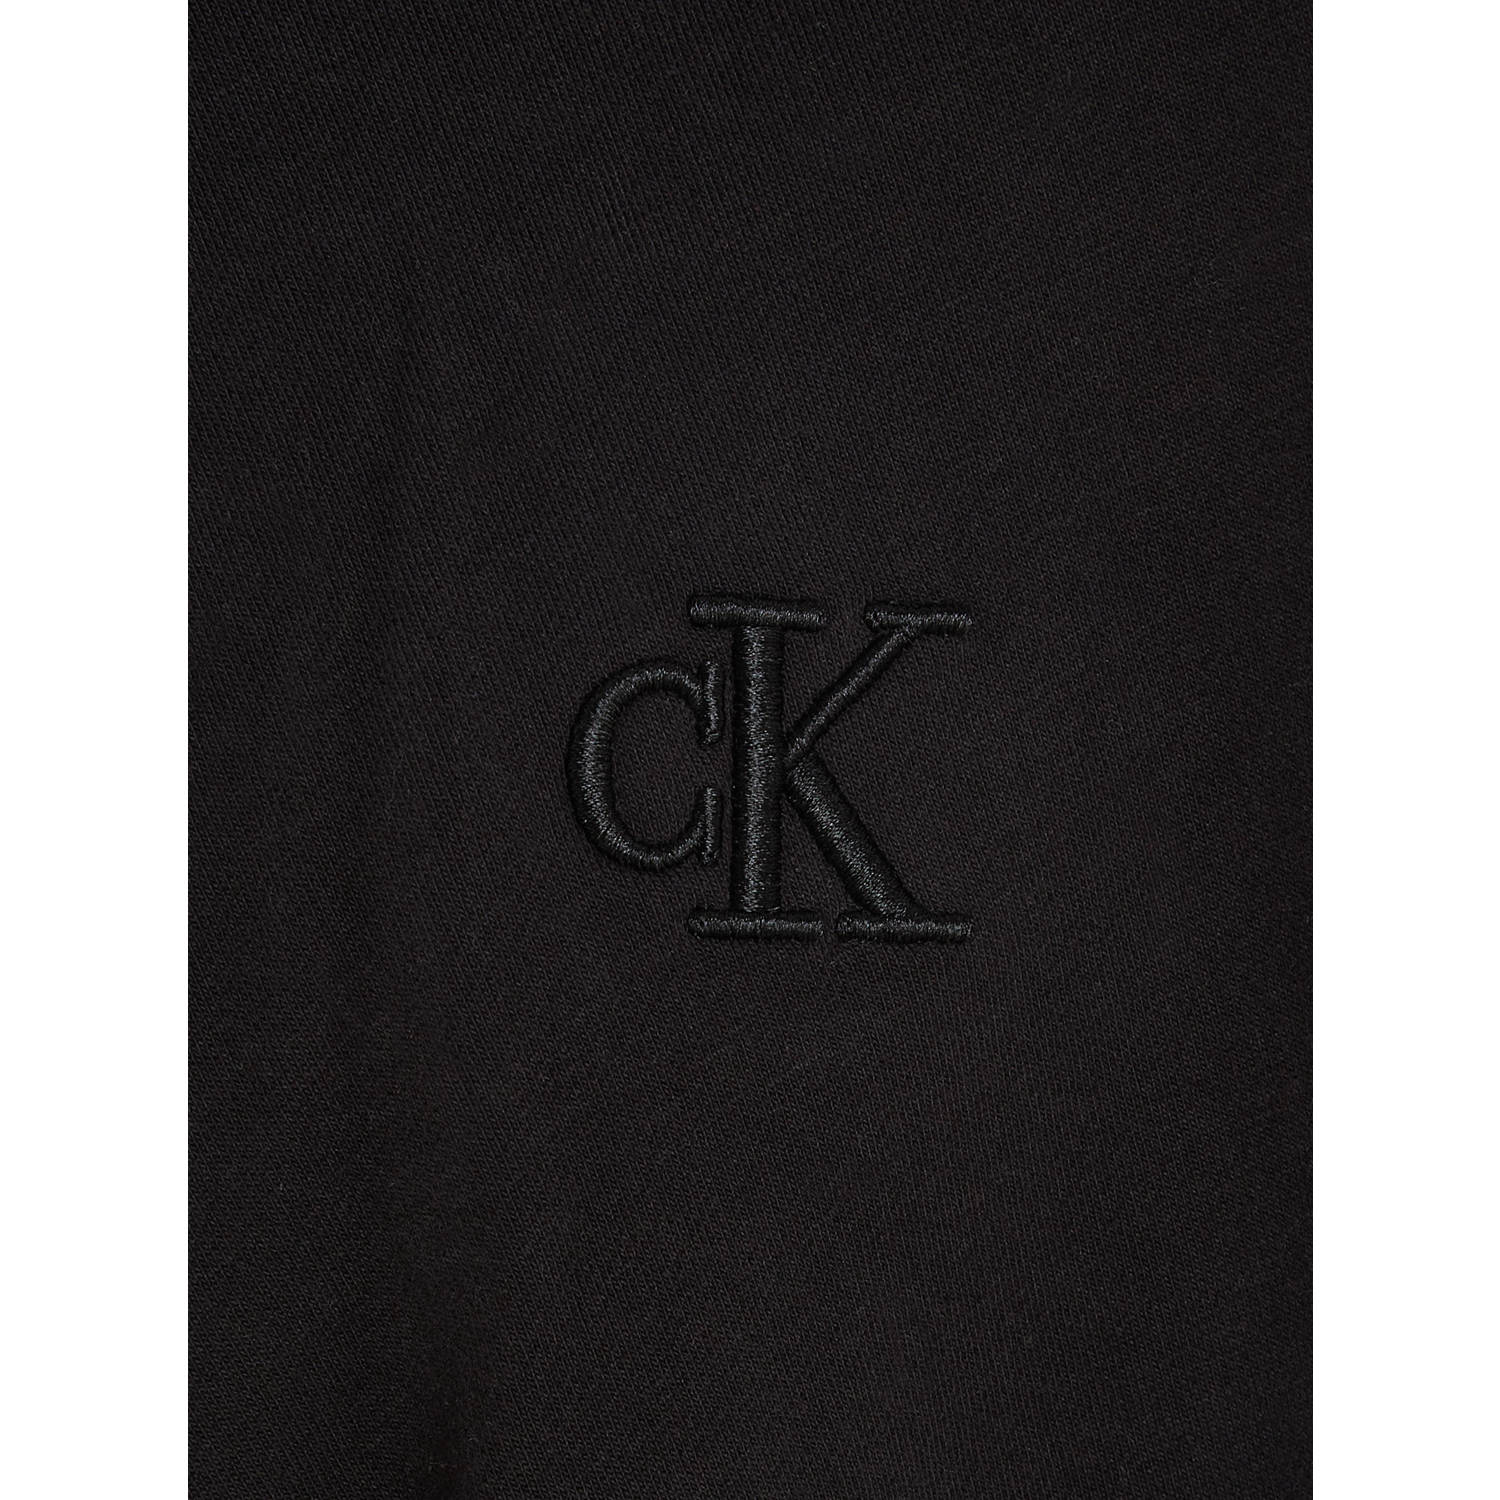 Calvin Klein hoodie met logo zwart